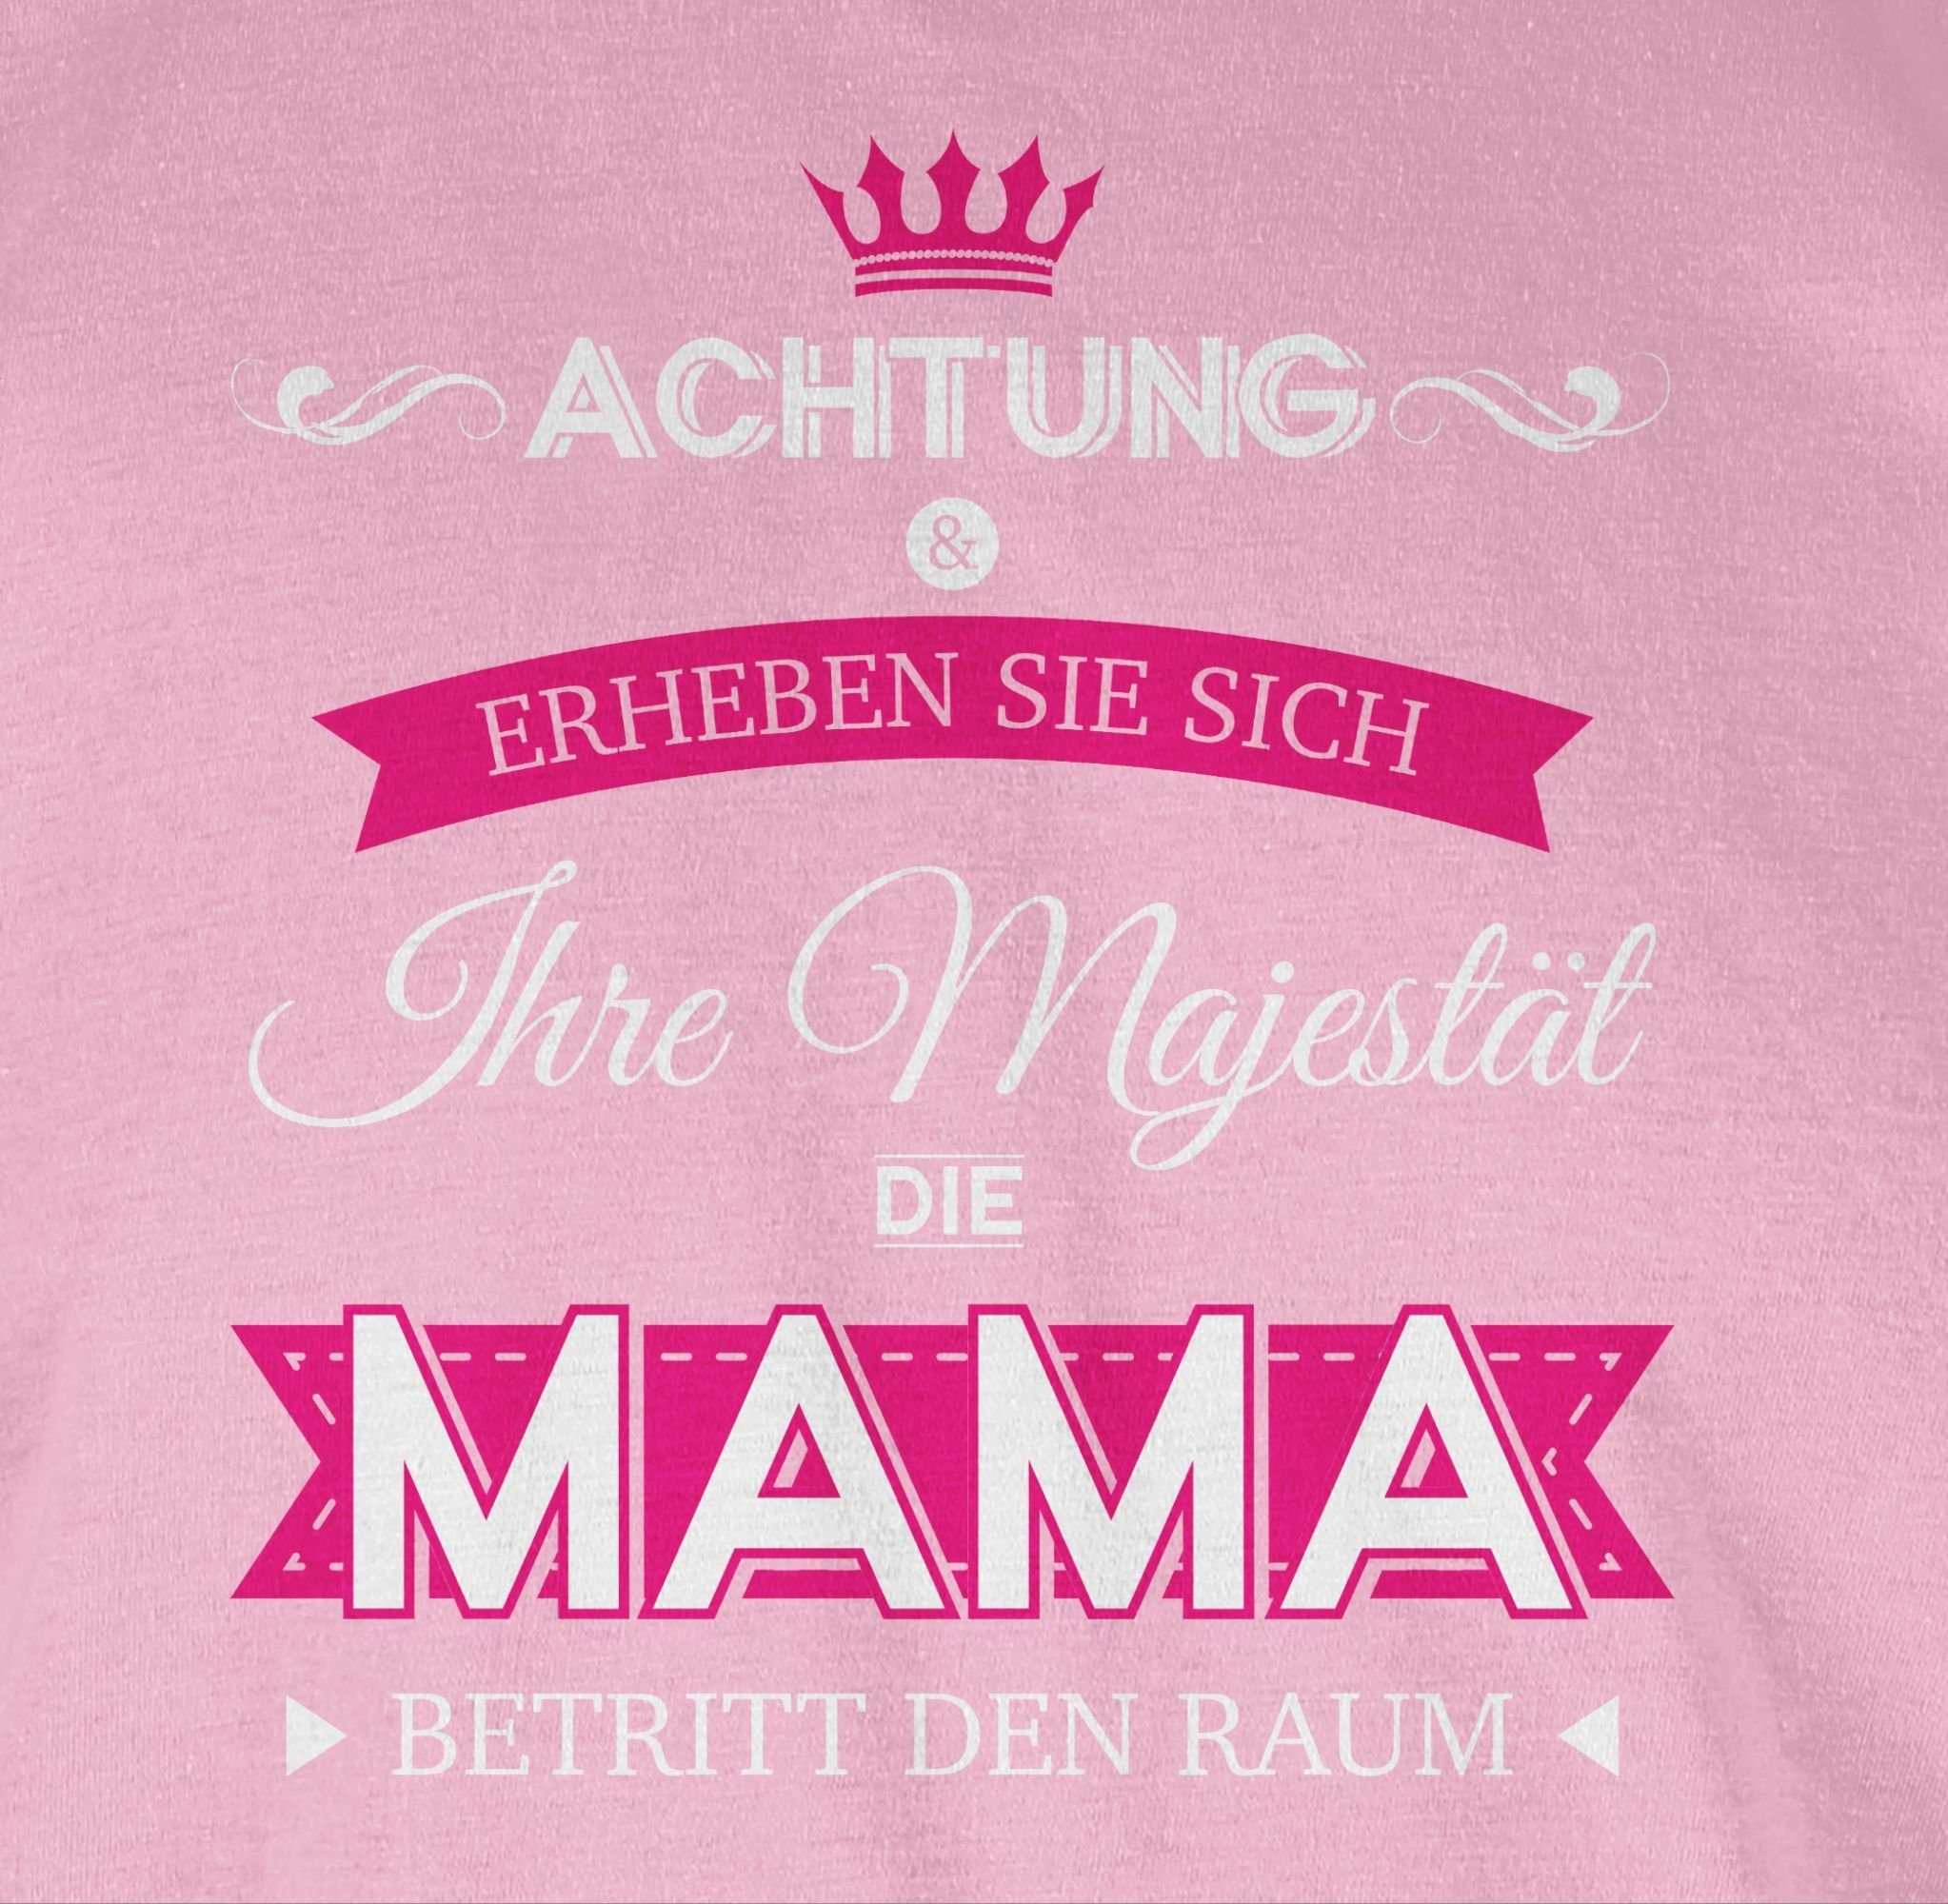 Damen Shirts Shirtracer T-Shirt Ihre Majestät die Mama - Muttertagsgeschenk - Damen Premium T-Shirt (1-tlg) Mama Geschenk Mutter